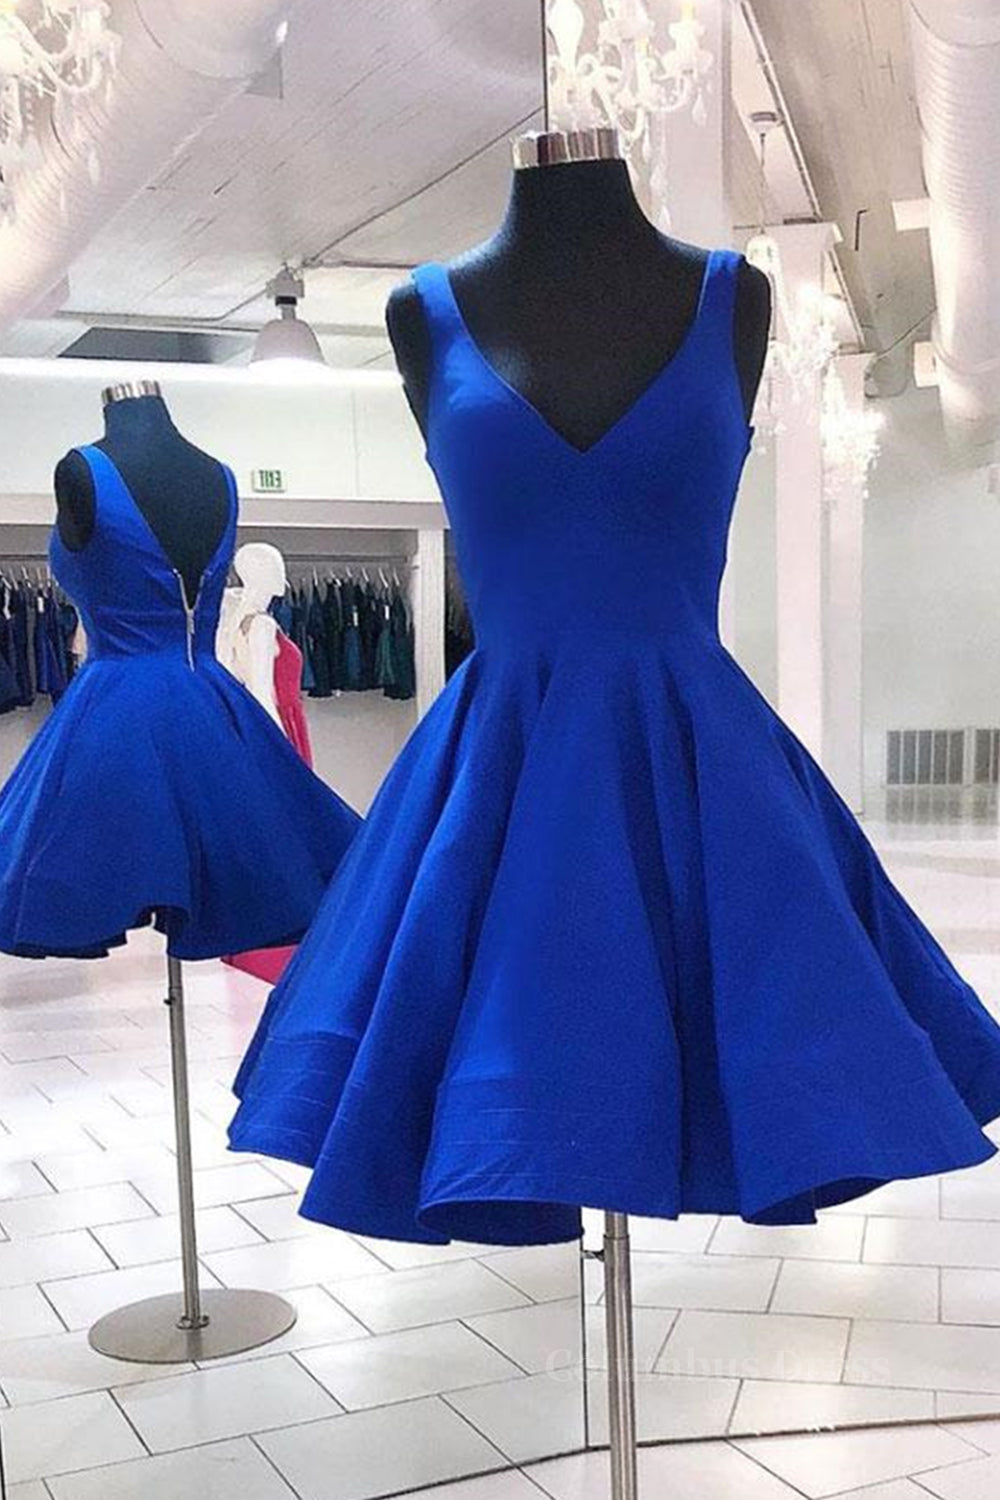 V Neck and V Back Short Blue Corset Prom Dress, Open Back Blue Corset Homecoming Dress, Blue Corset Formal Evening Dress outfit, Evening Dress Black